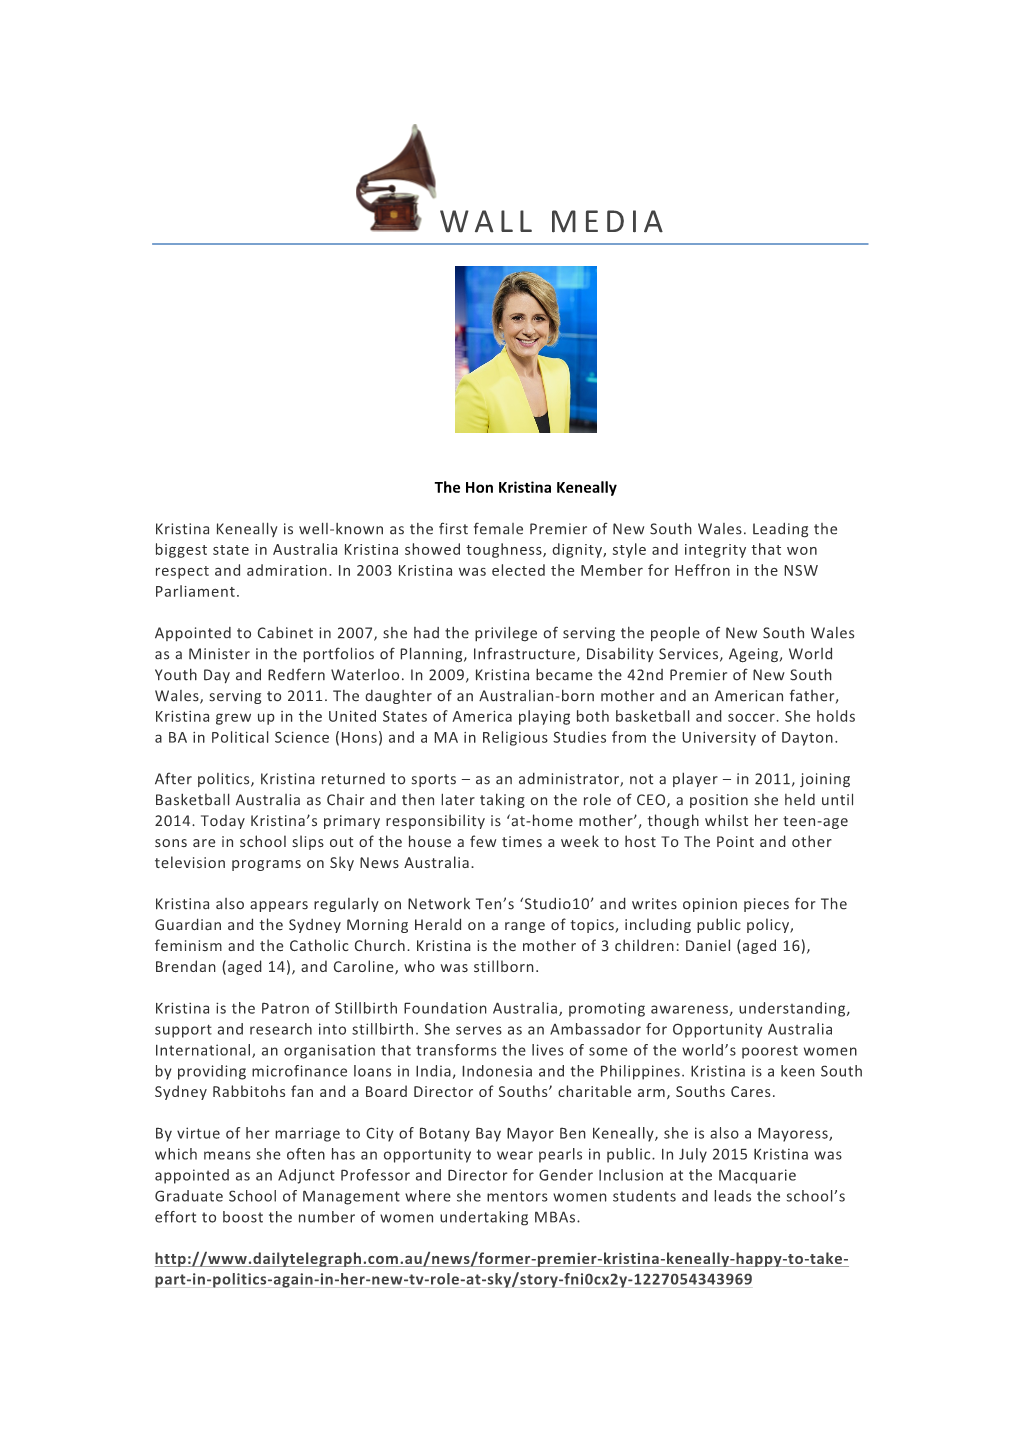 Download Kristina Keneally's Bio in PDF Format